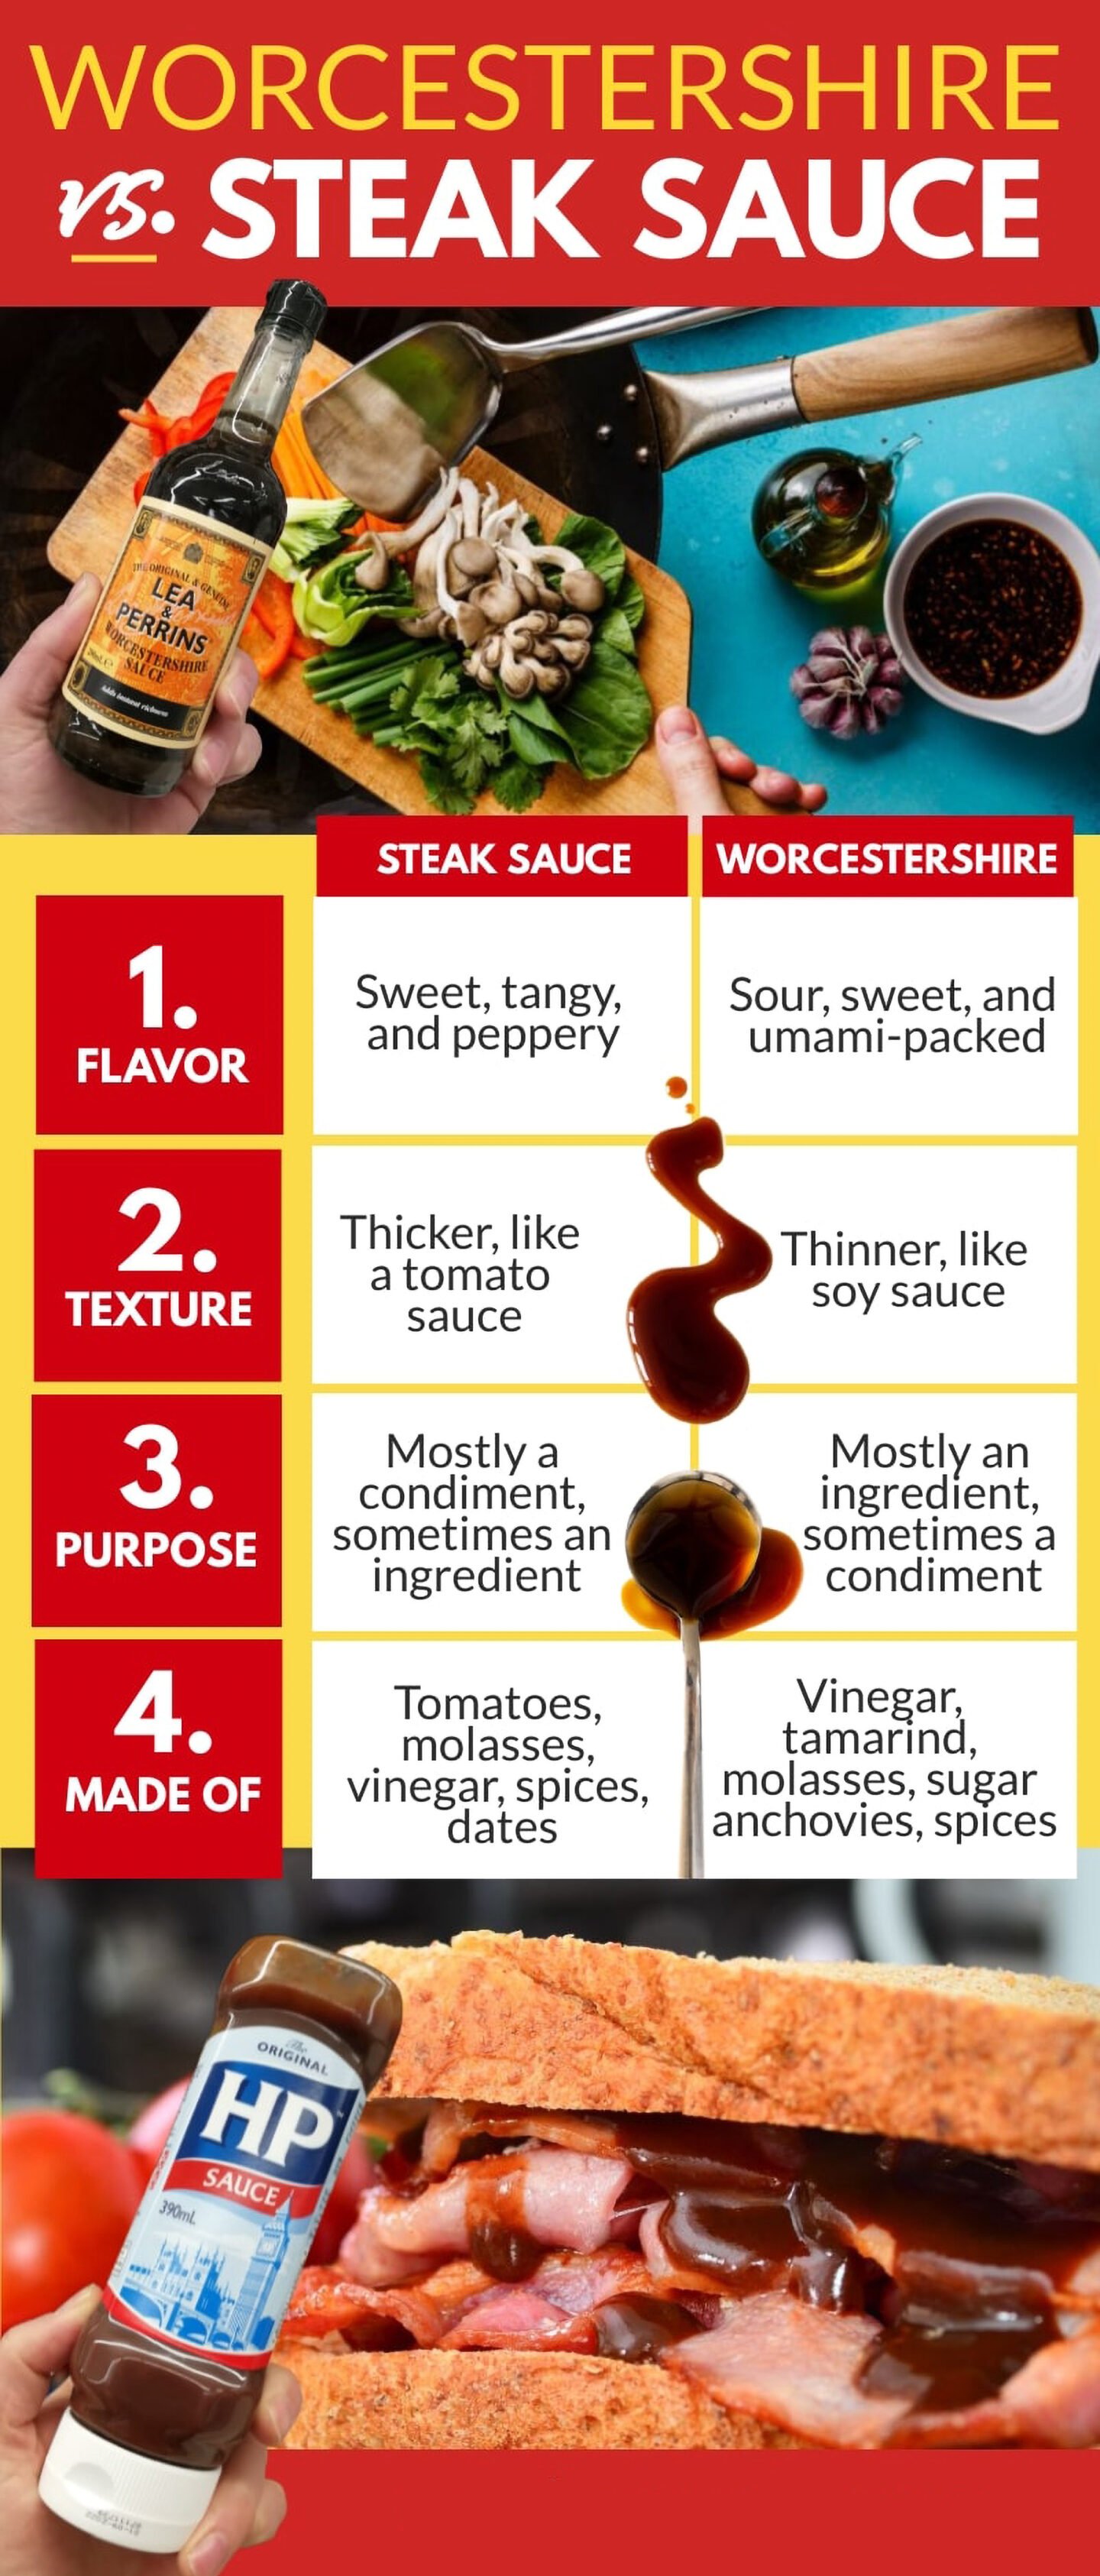 Steak Sauce Vs Worcestershire Sauce Infographic